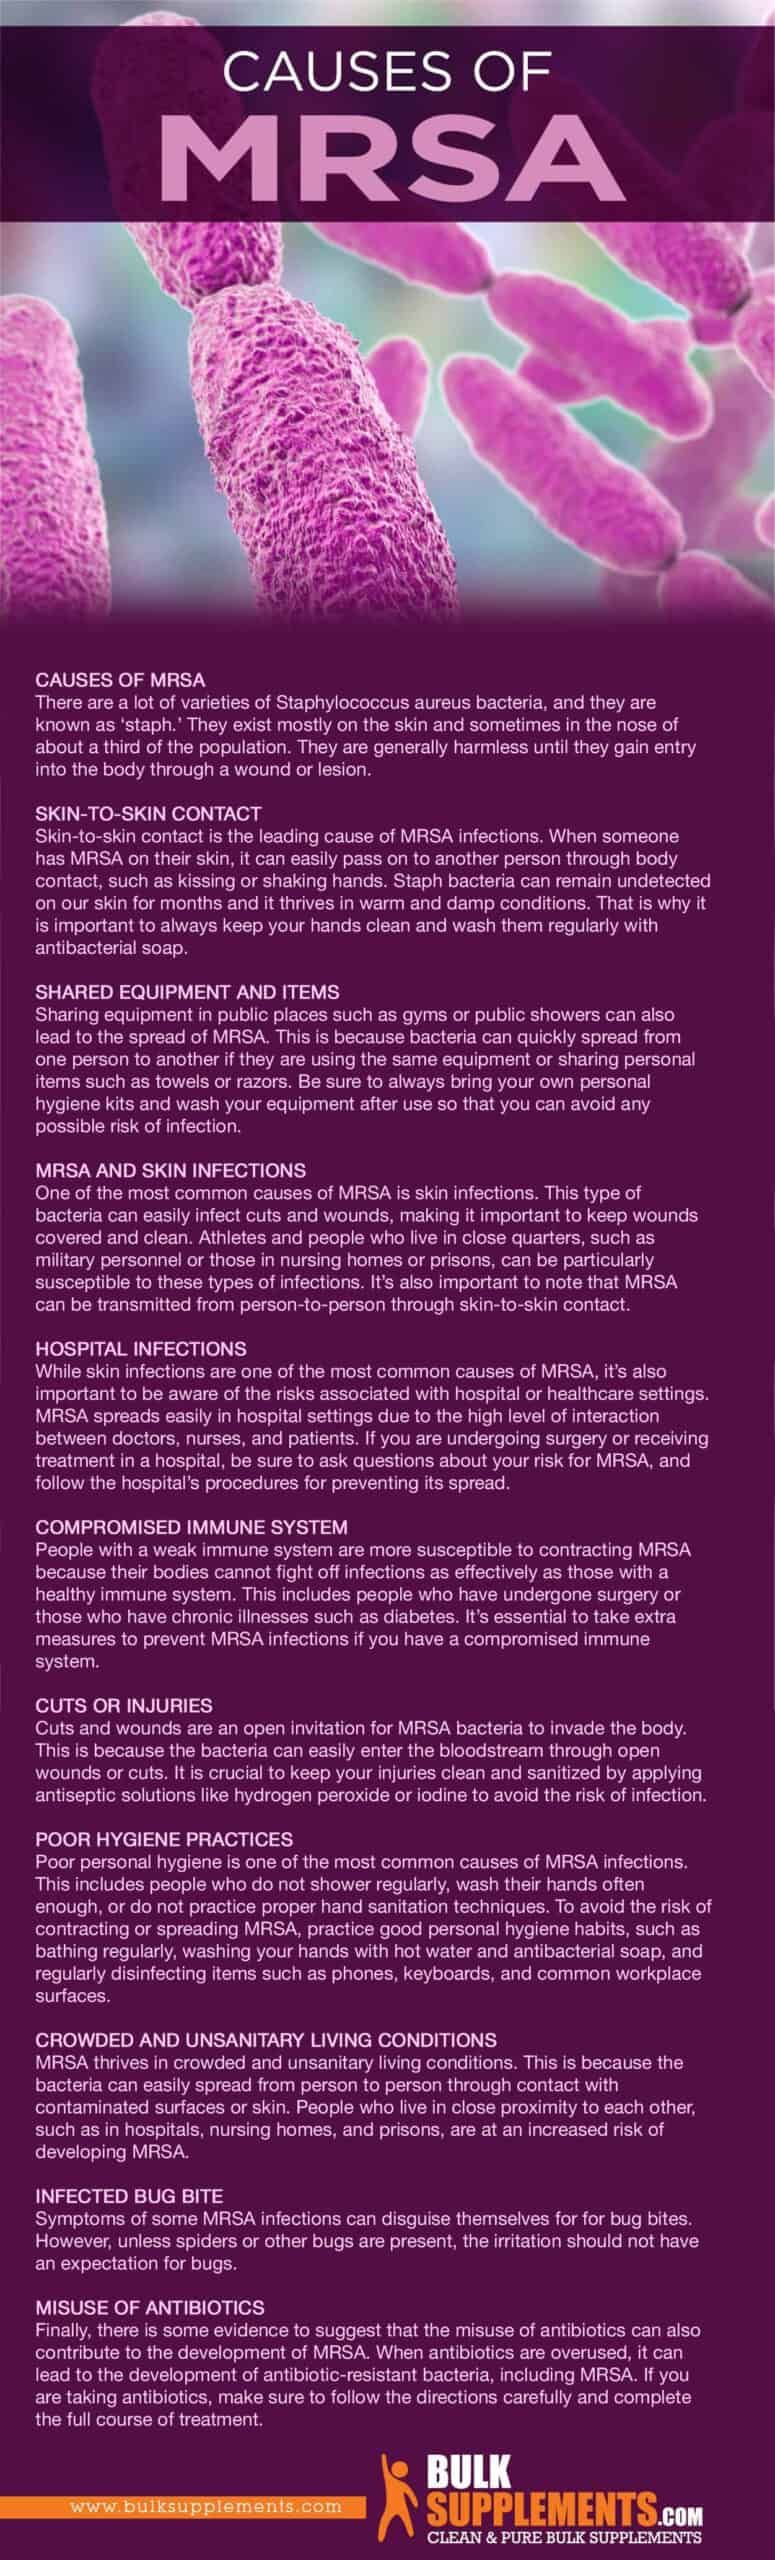 Causes of MRSA